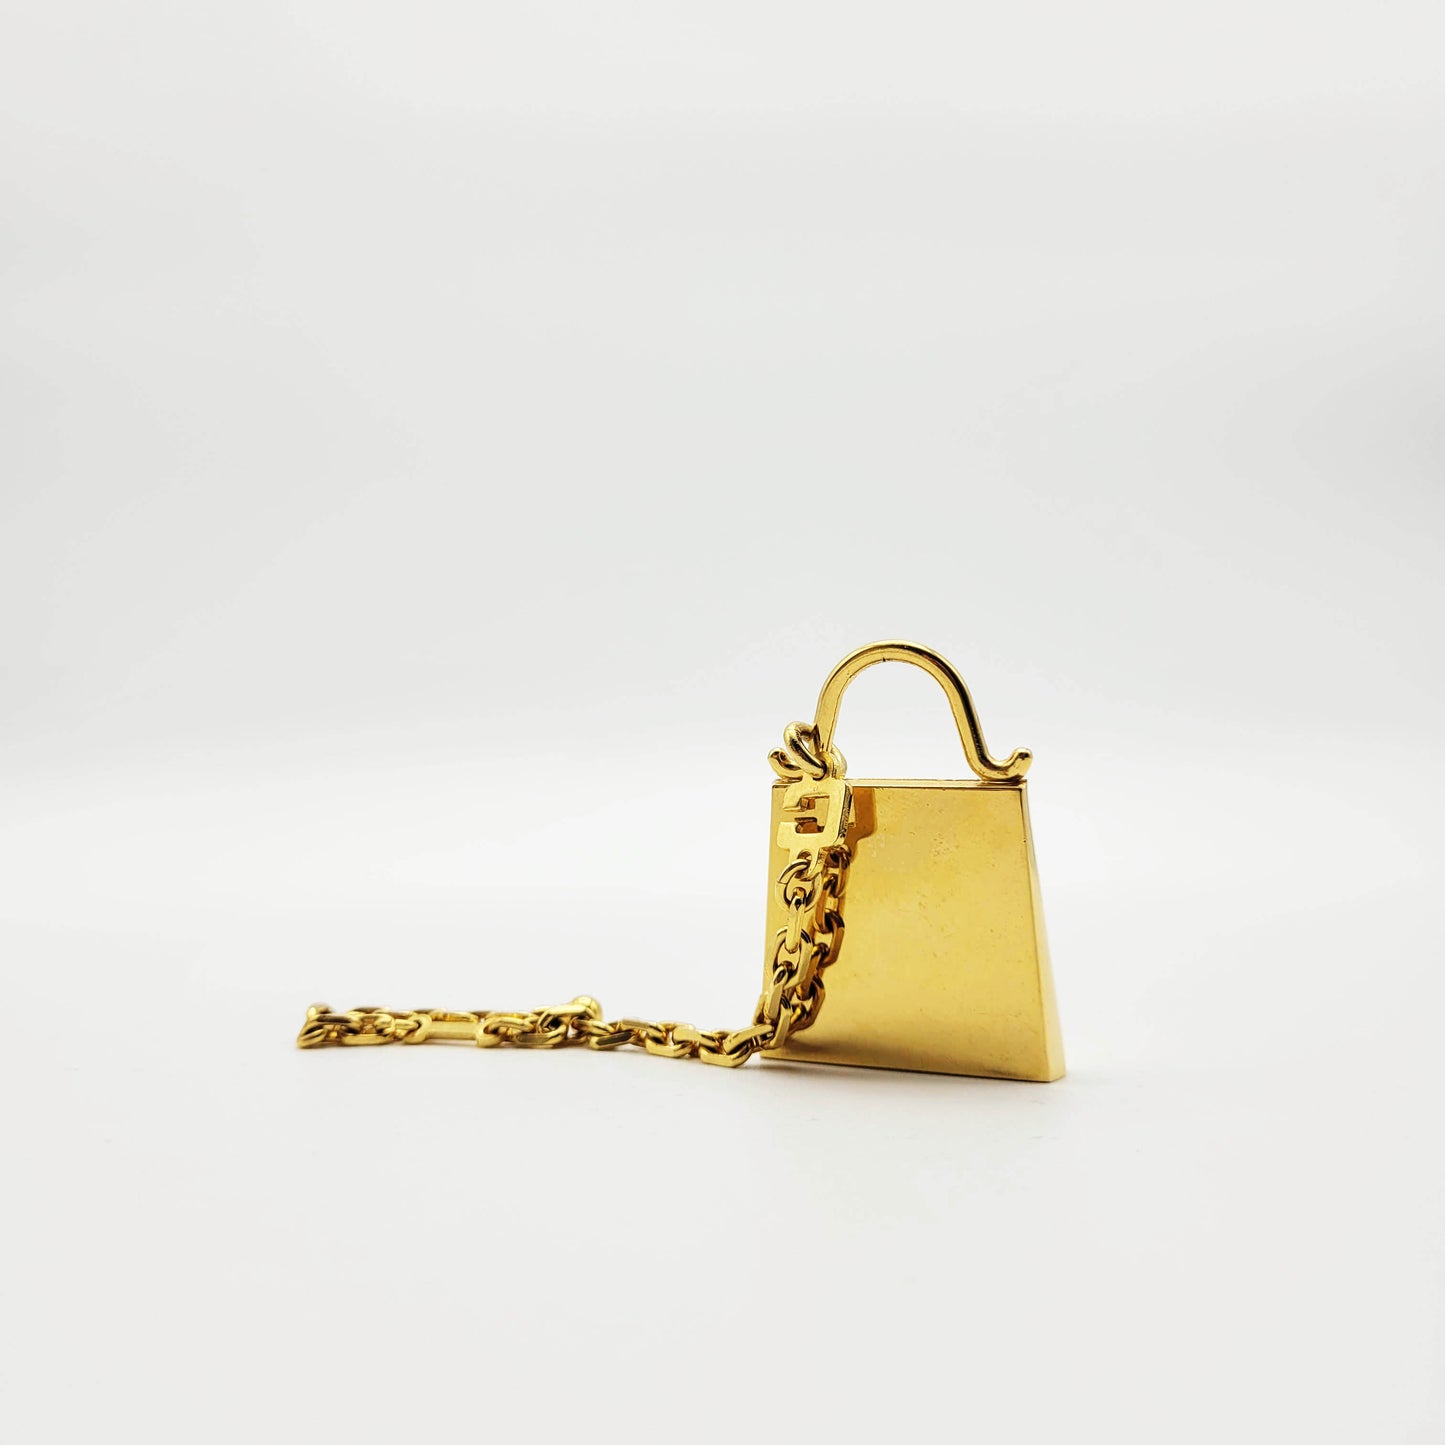 Vintage bag accessory Karl Lagerfeld